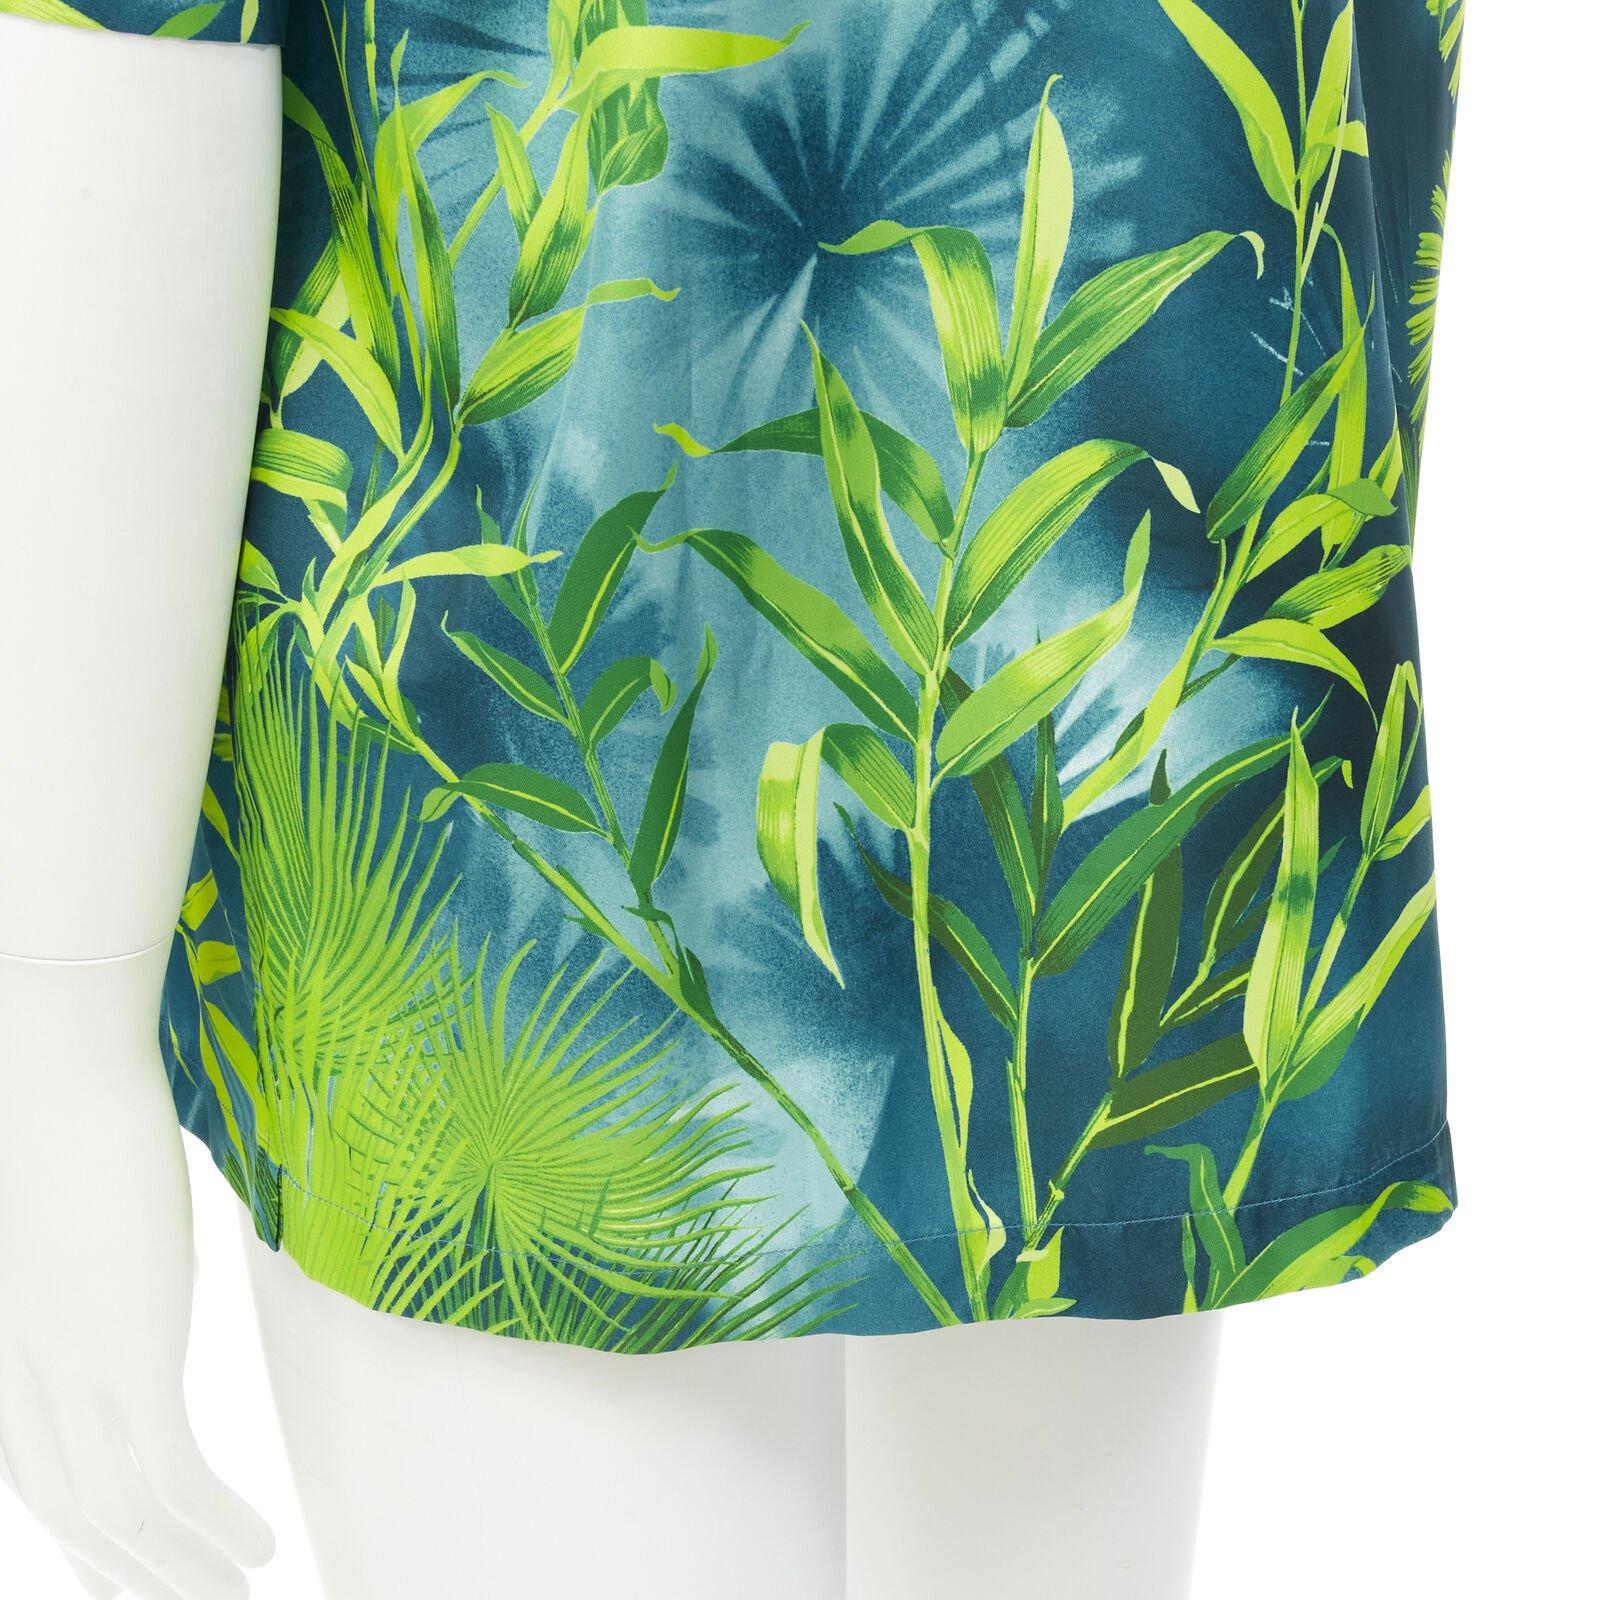 VERSACE 2020 Iconic JLo Jungle print green tropical print shirt EU38 S For Sale 6